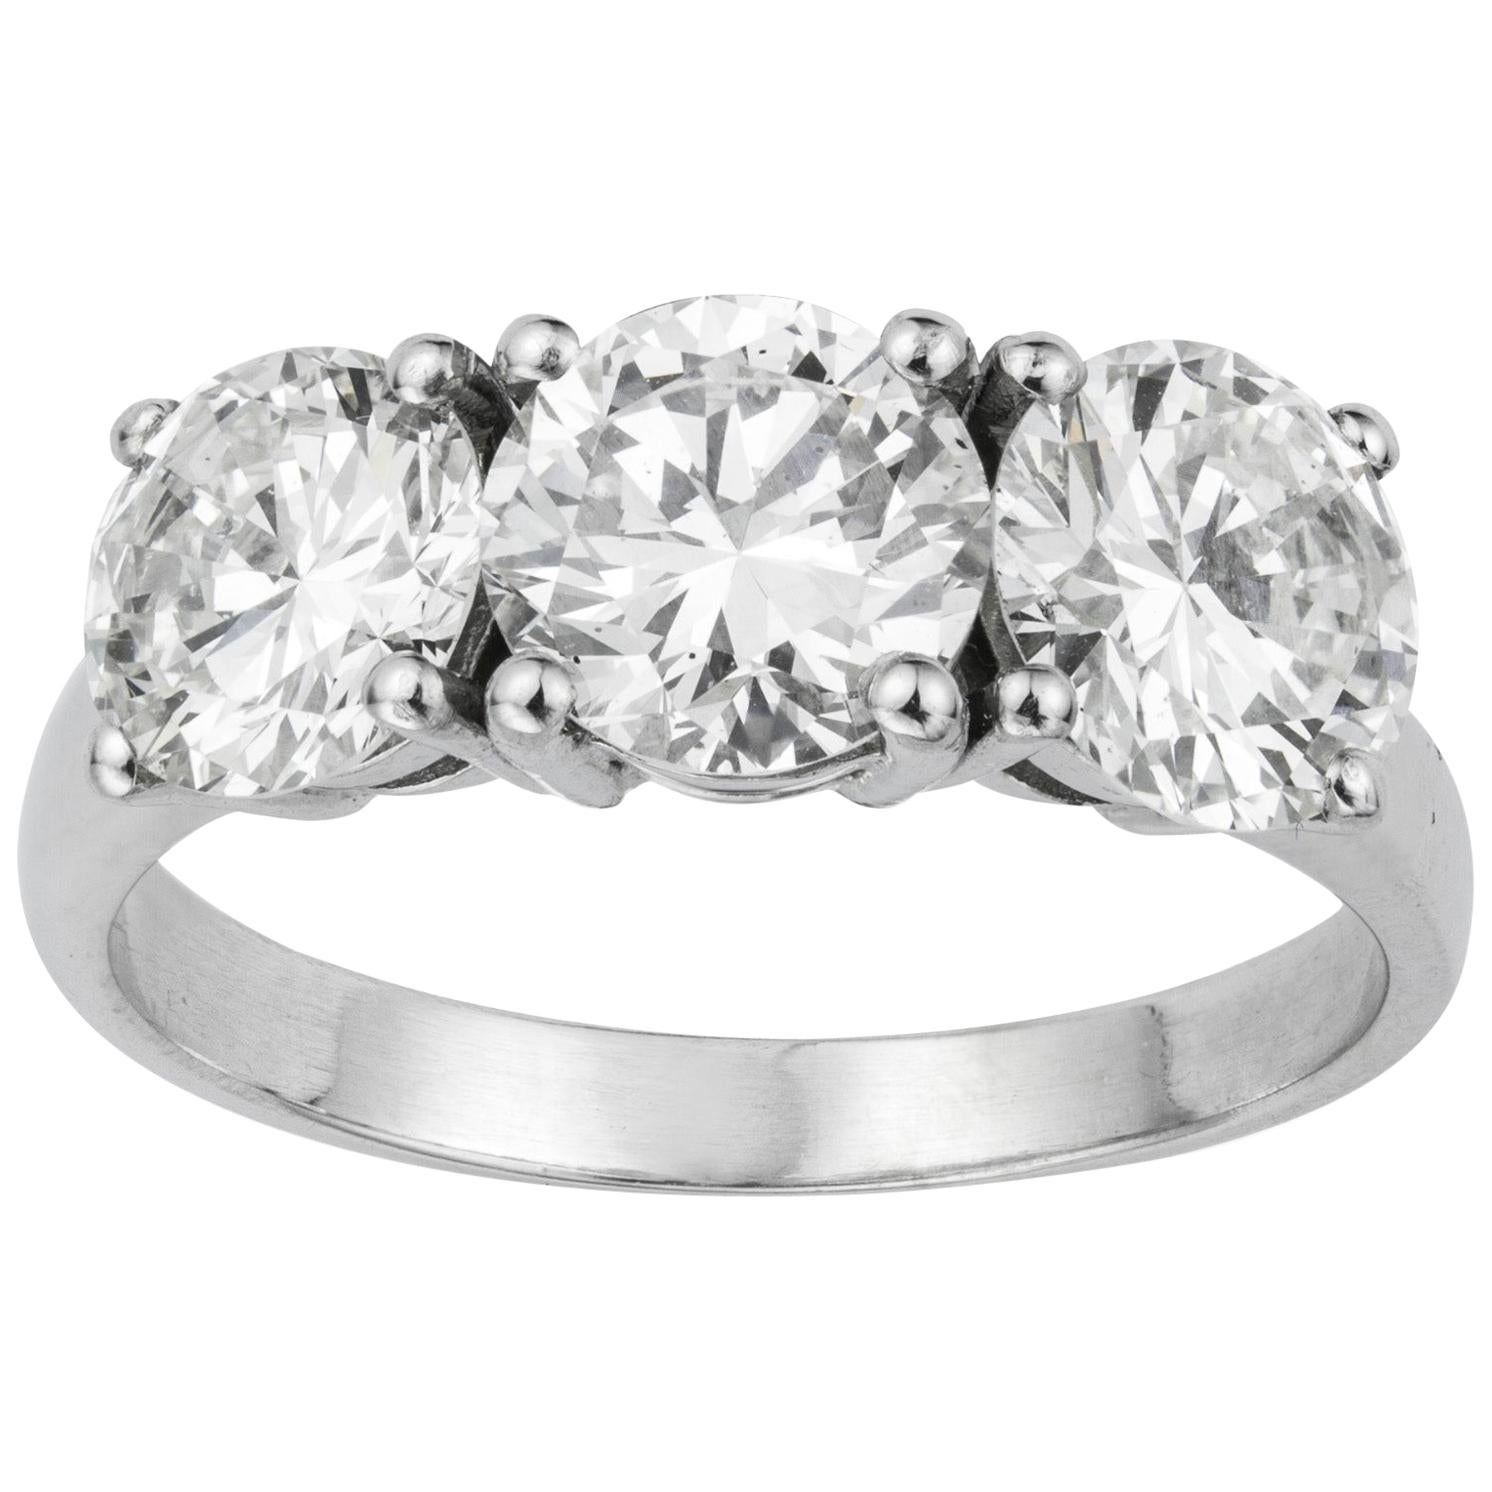 A Three Stone Diamond Ring